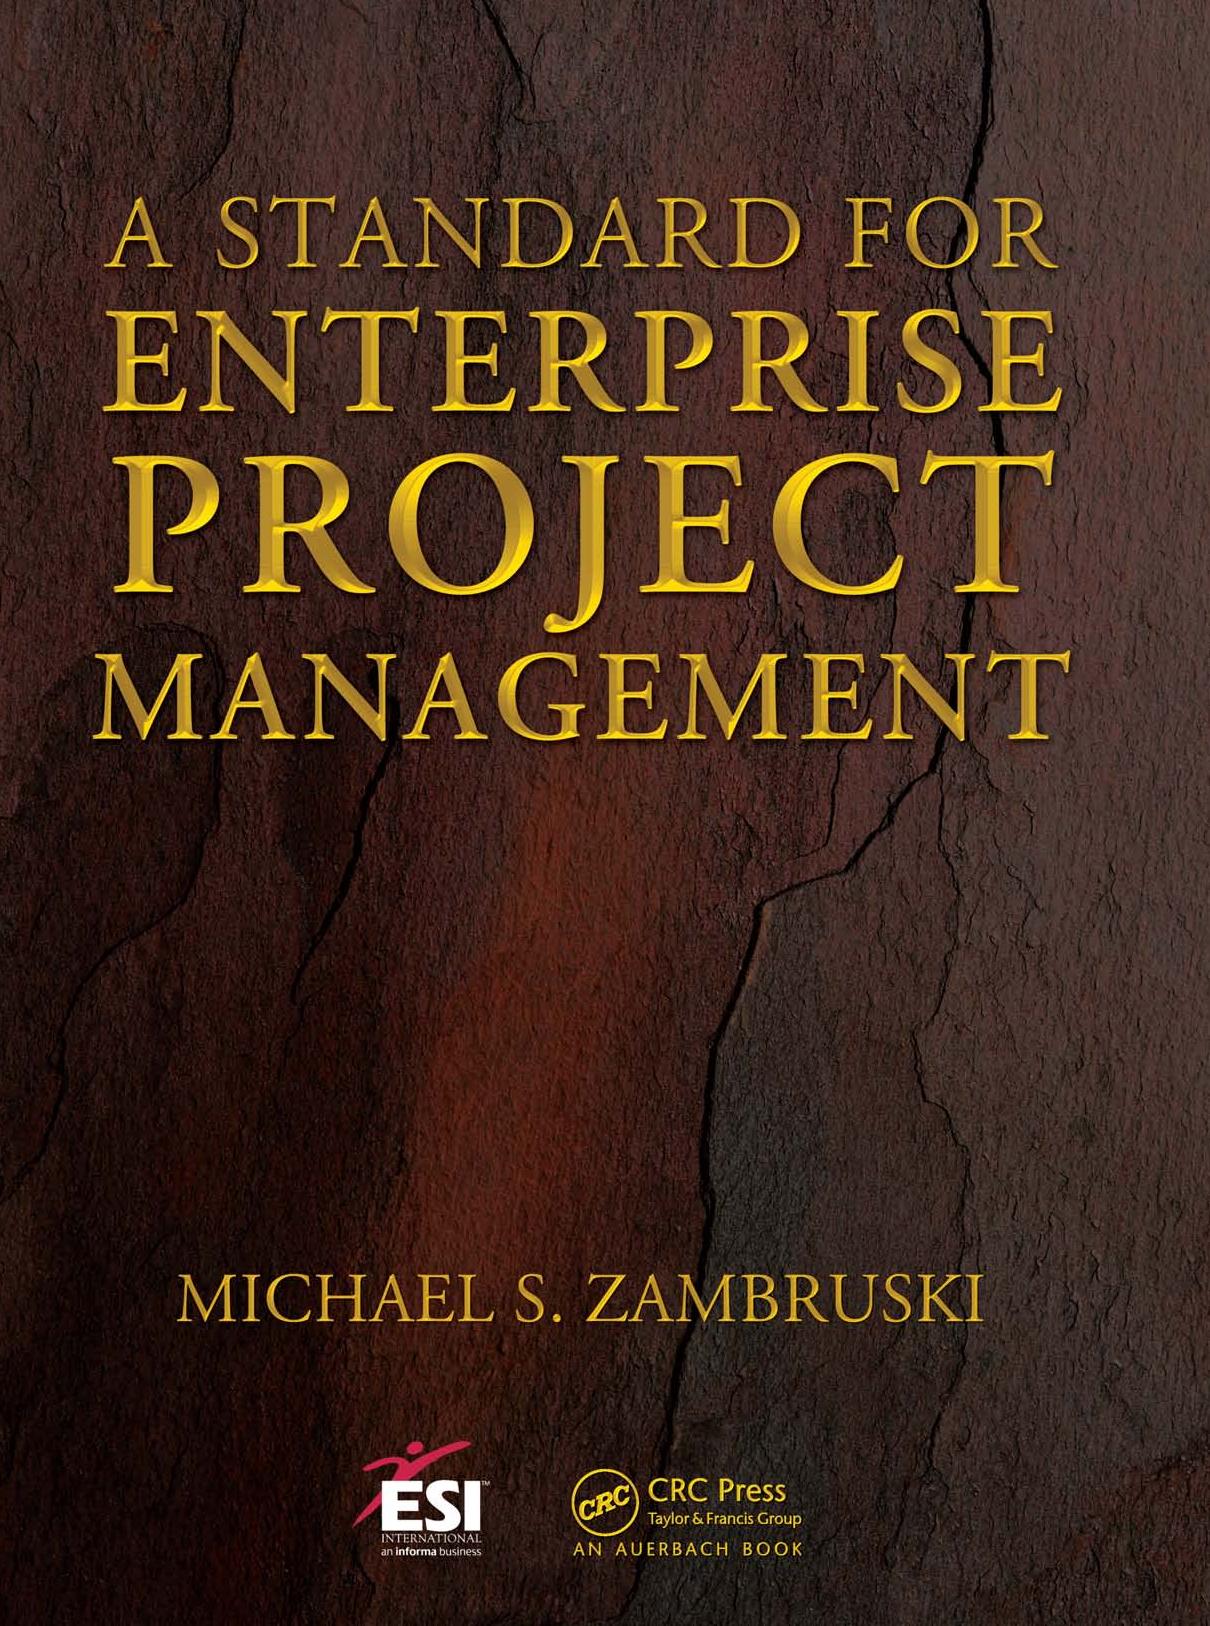 A Standard for Enterprise Project Management. 2009